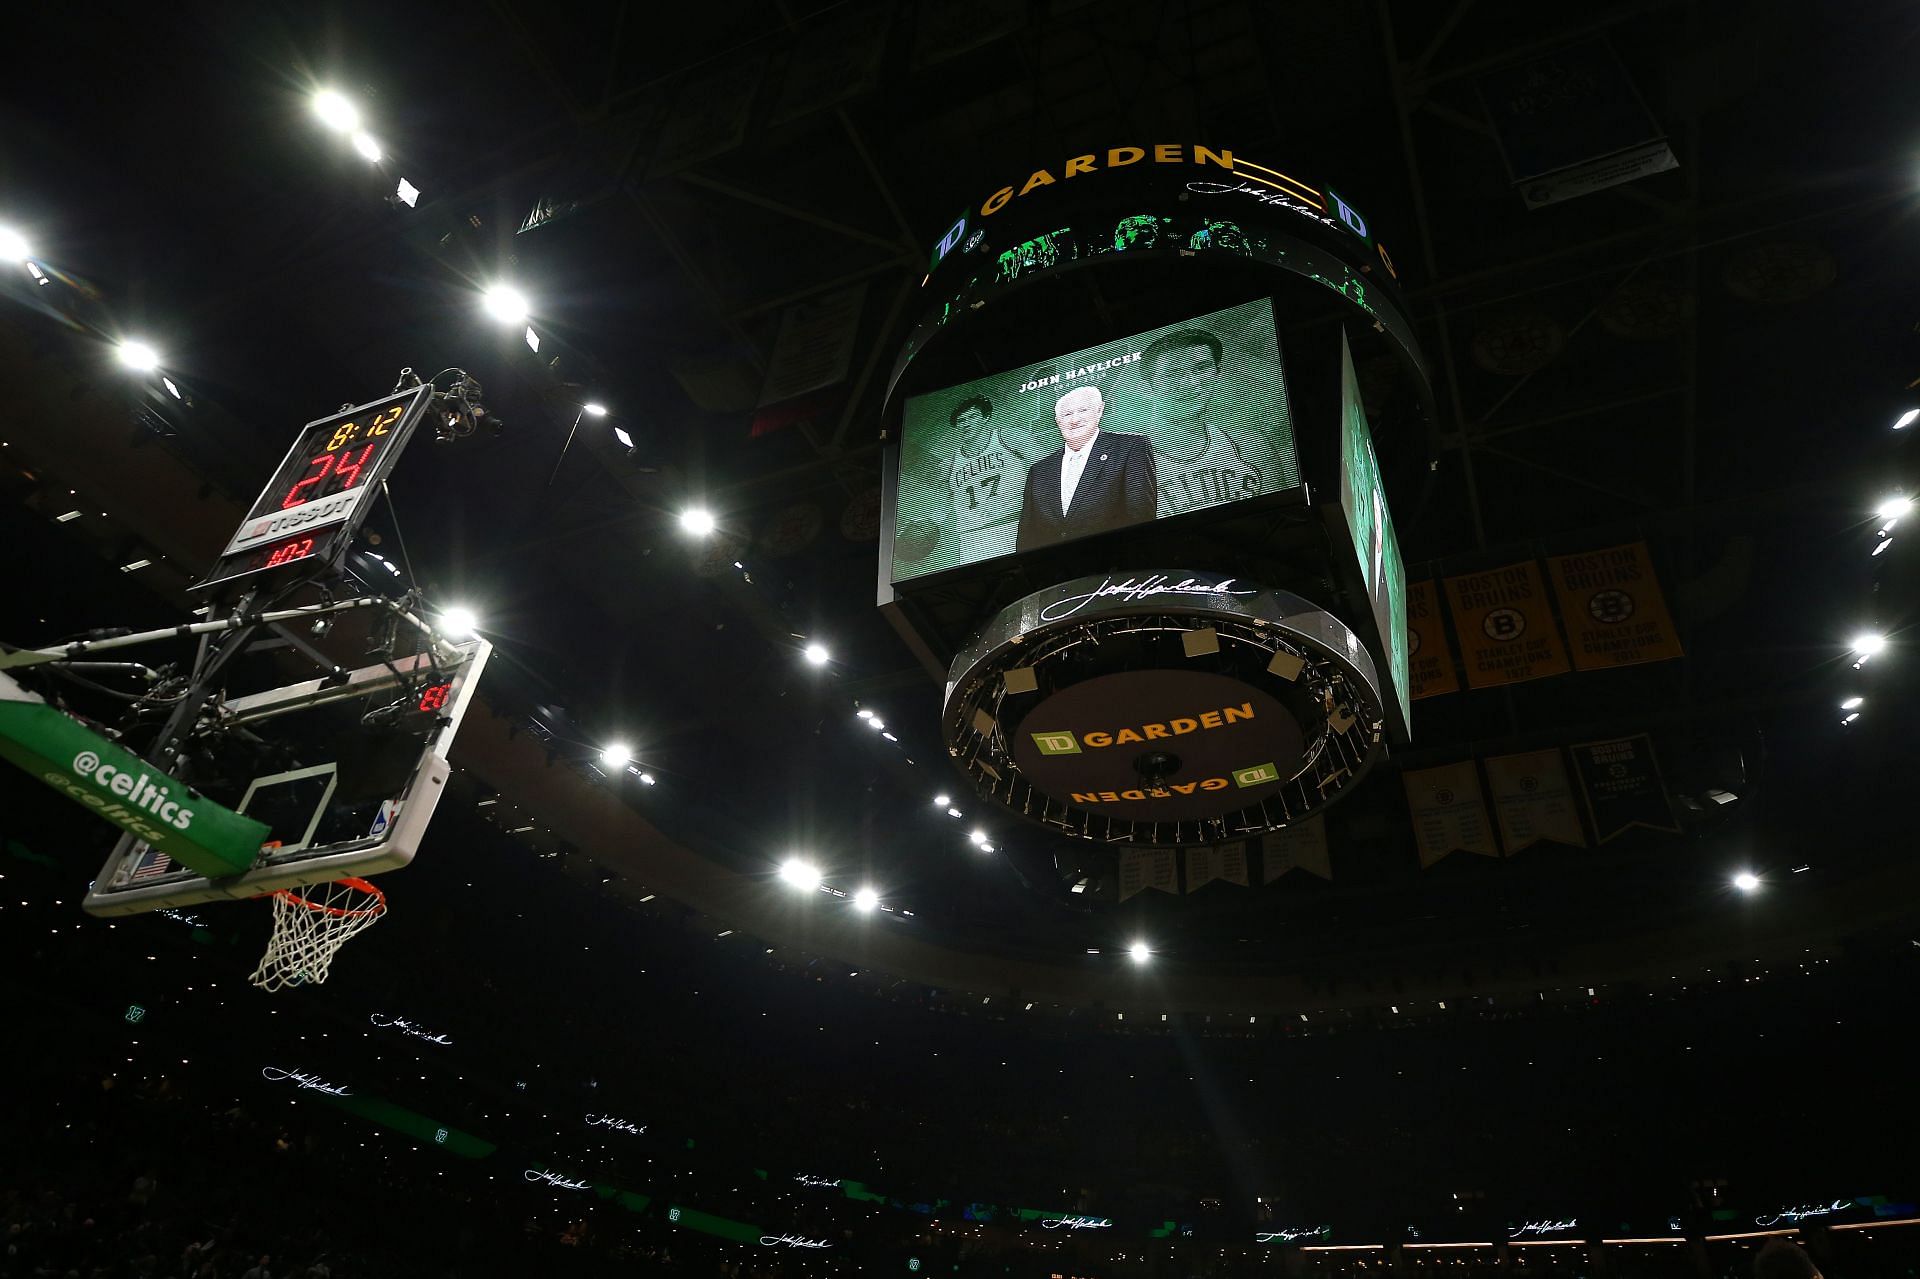 The Celtics honor John Havlicek, a former player, during a postseason game in 2019.